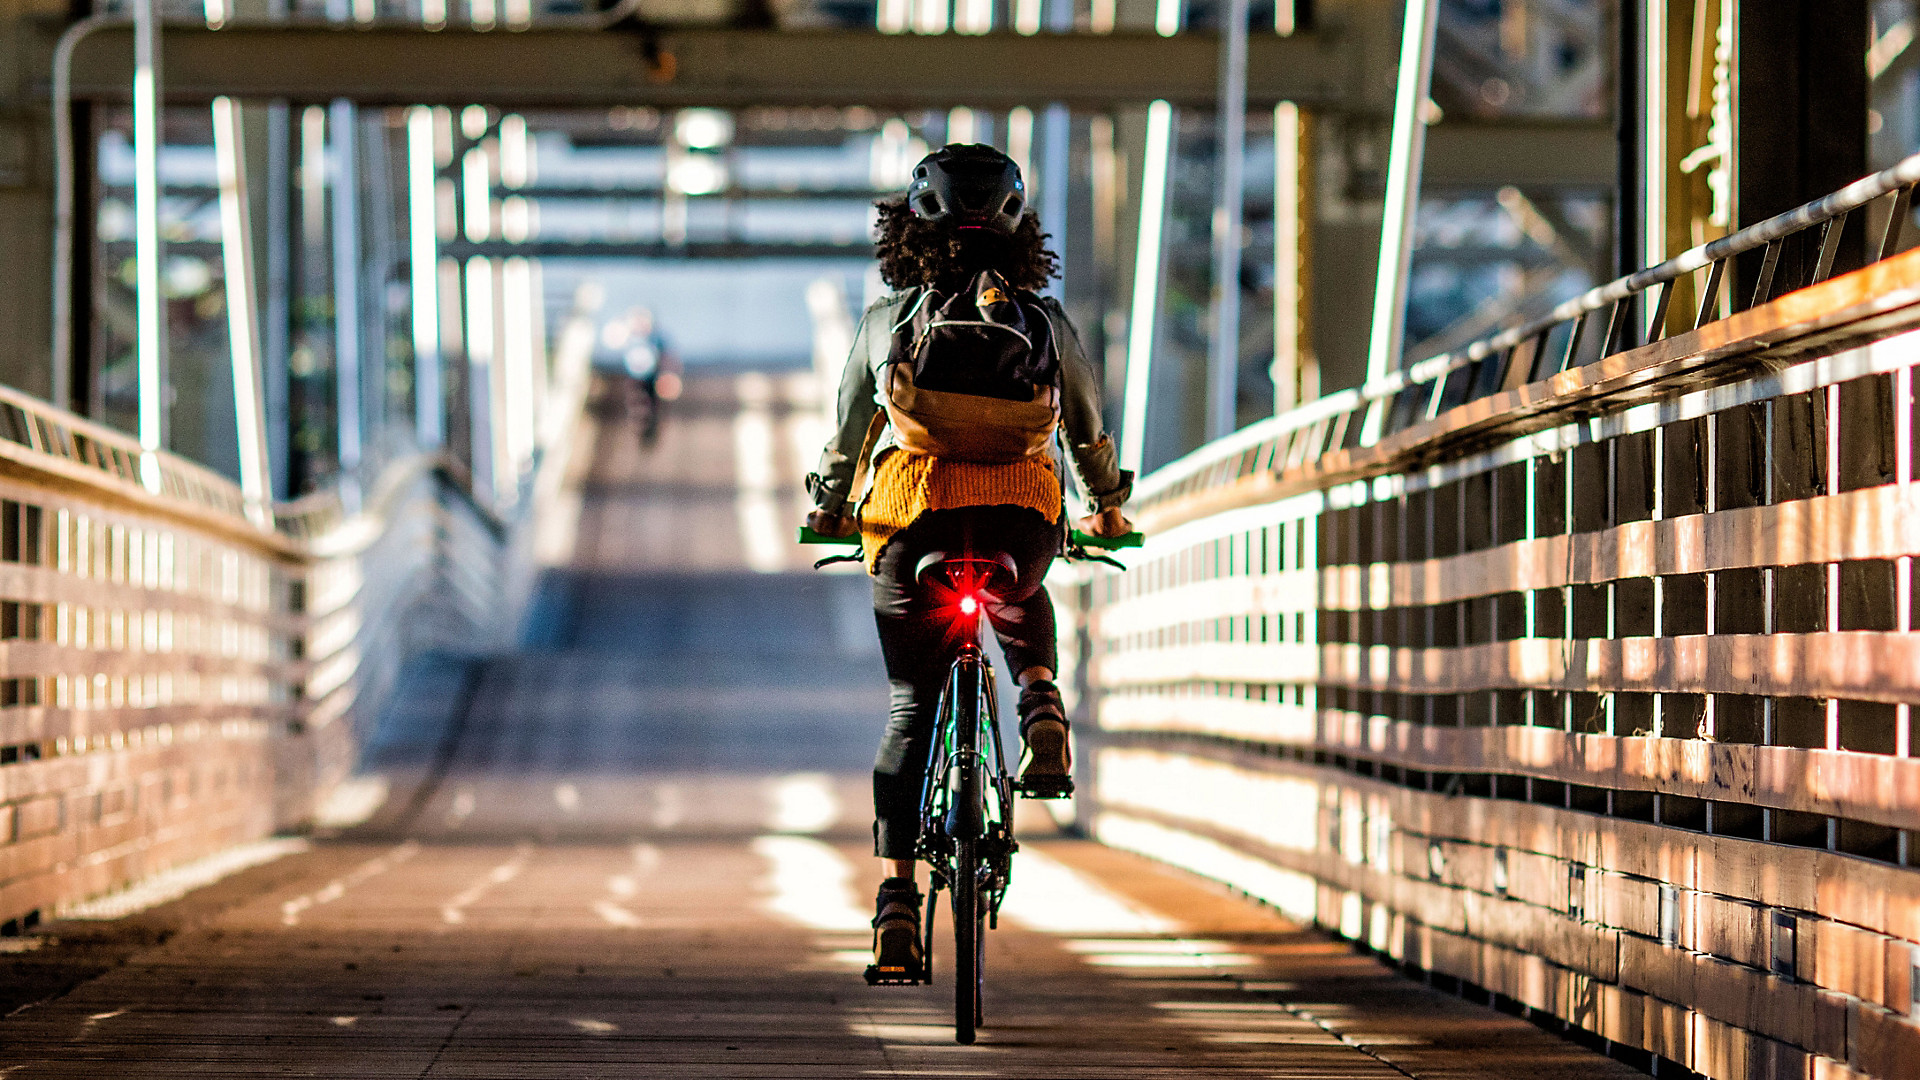 Simposio Viaje Gracias Ropa urbana y de fitness | Trek Bikes (ES)